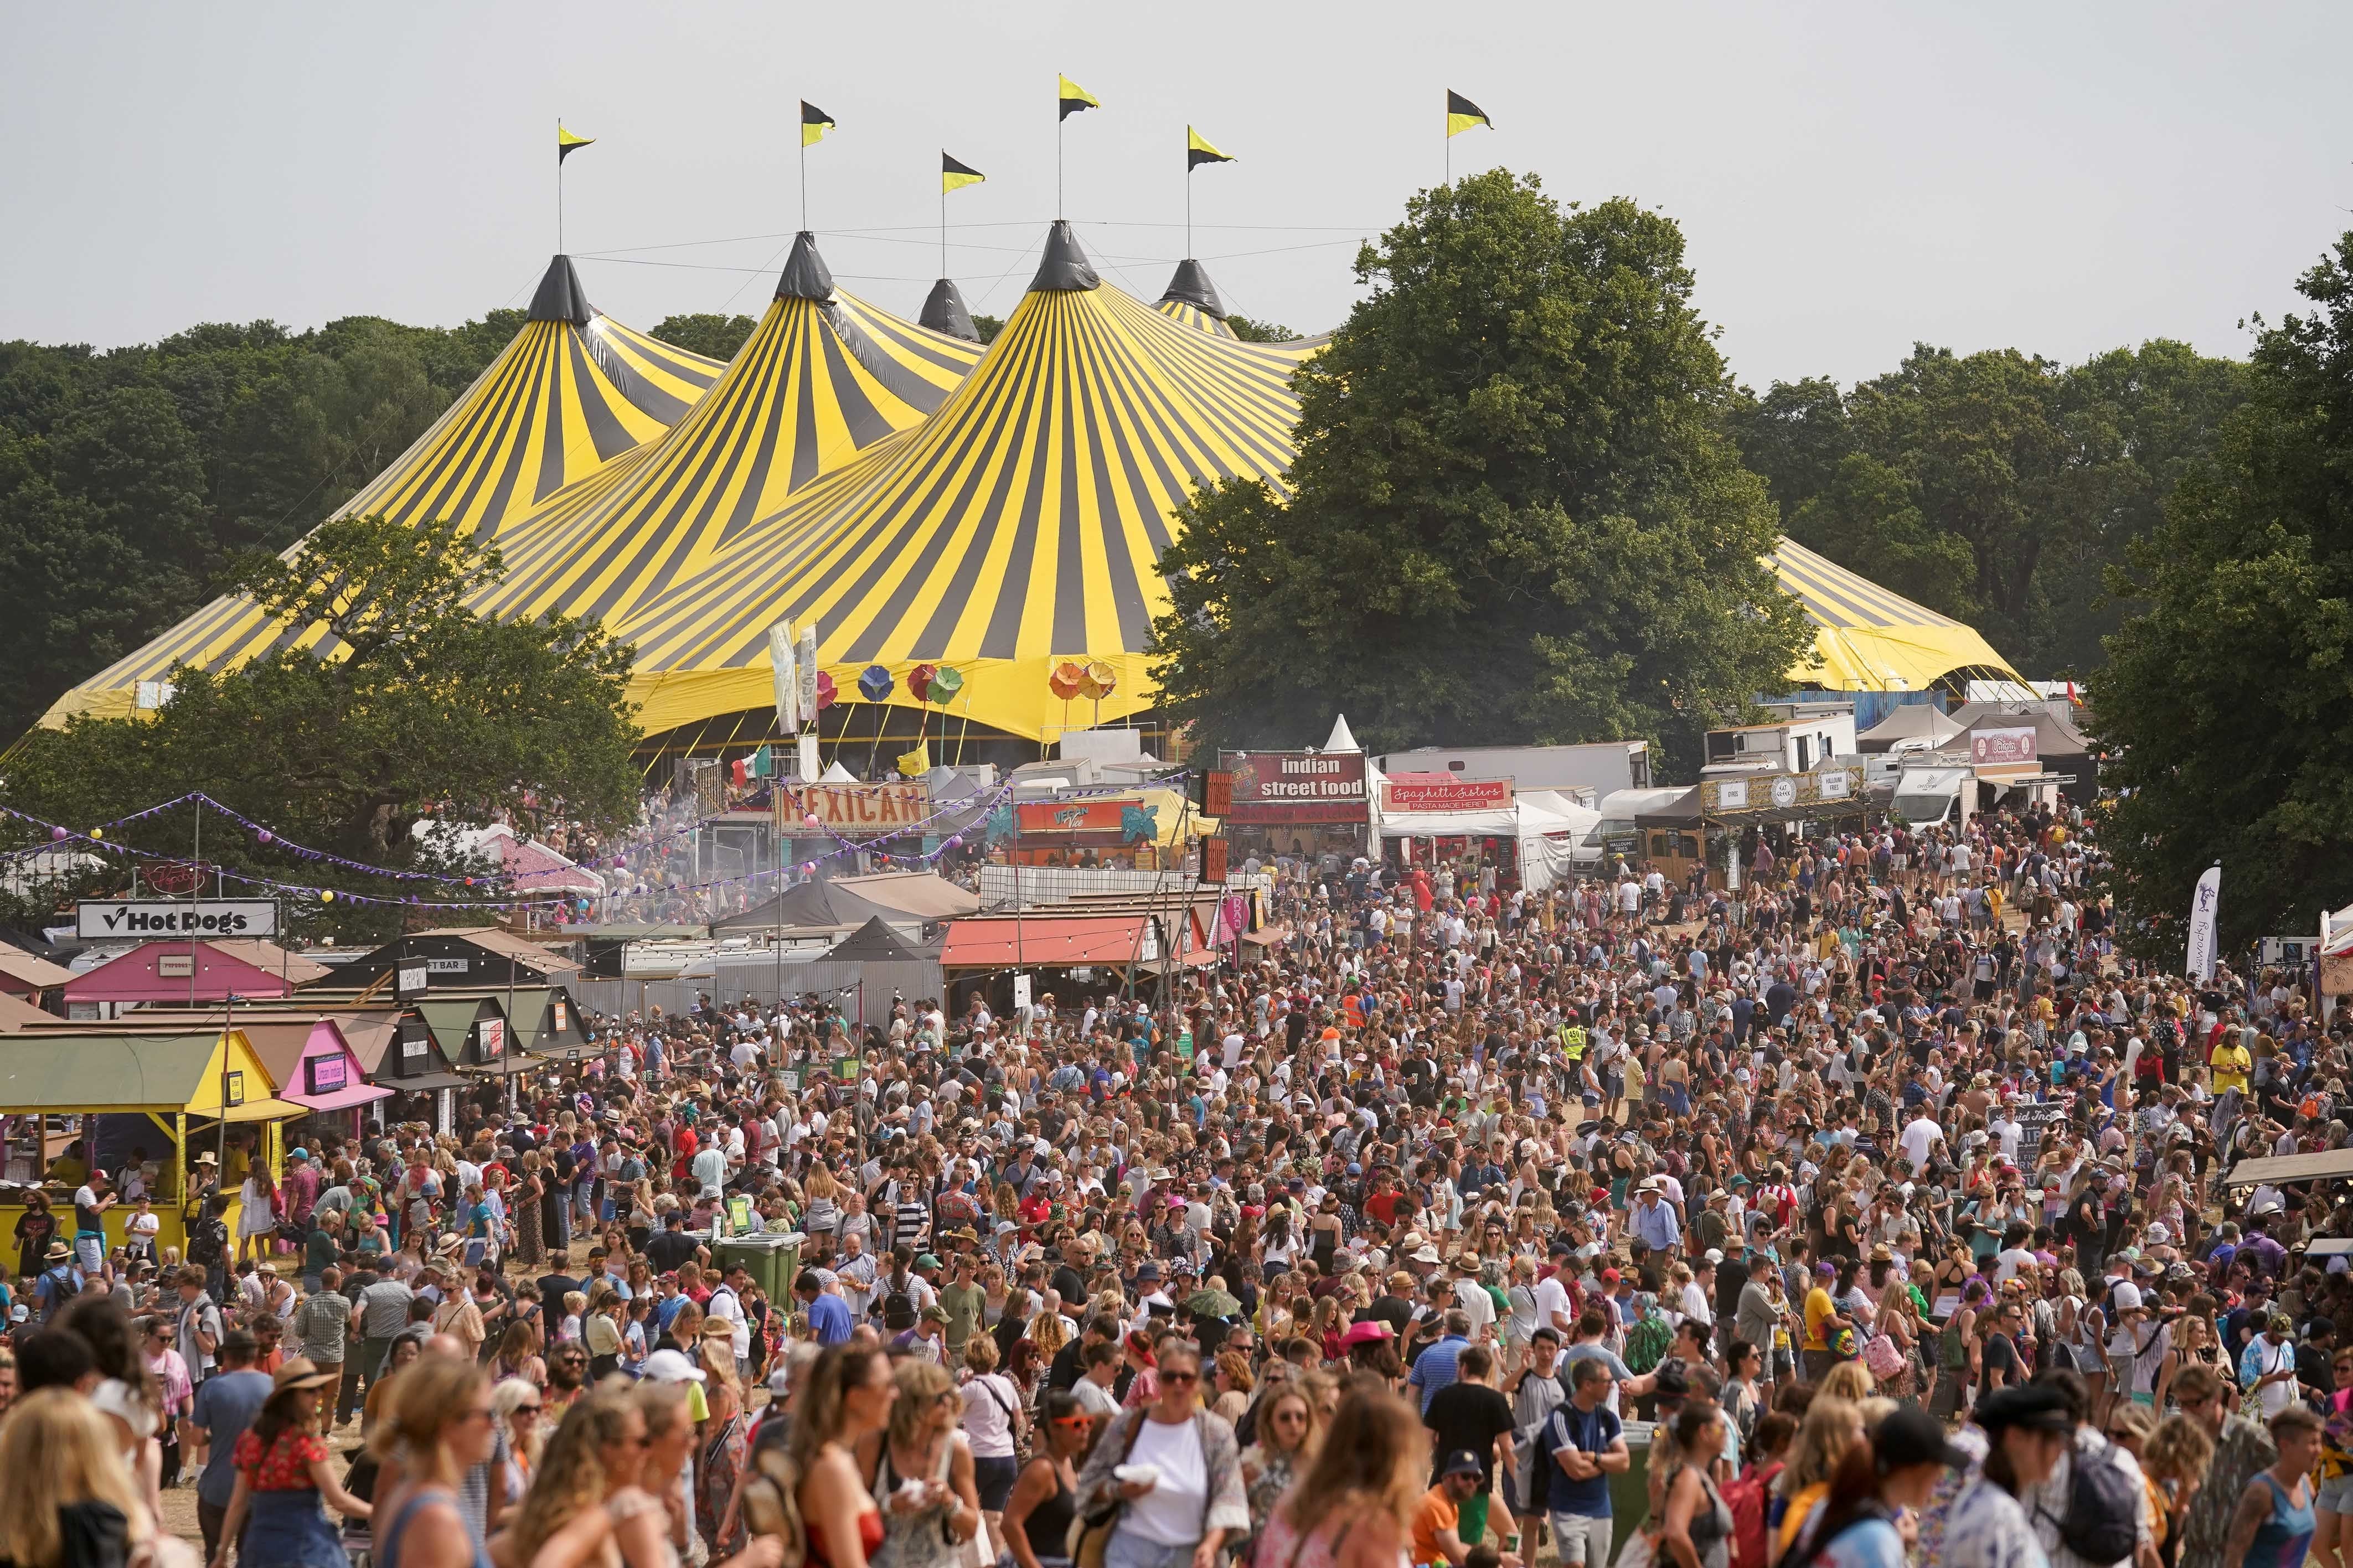 Festival goers at Latitude festival in Henham Park, Suffolk, last month